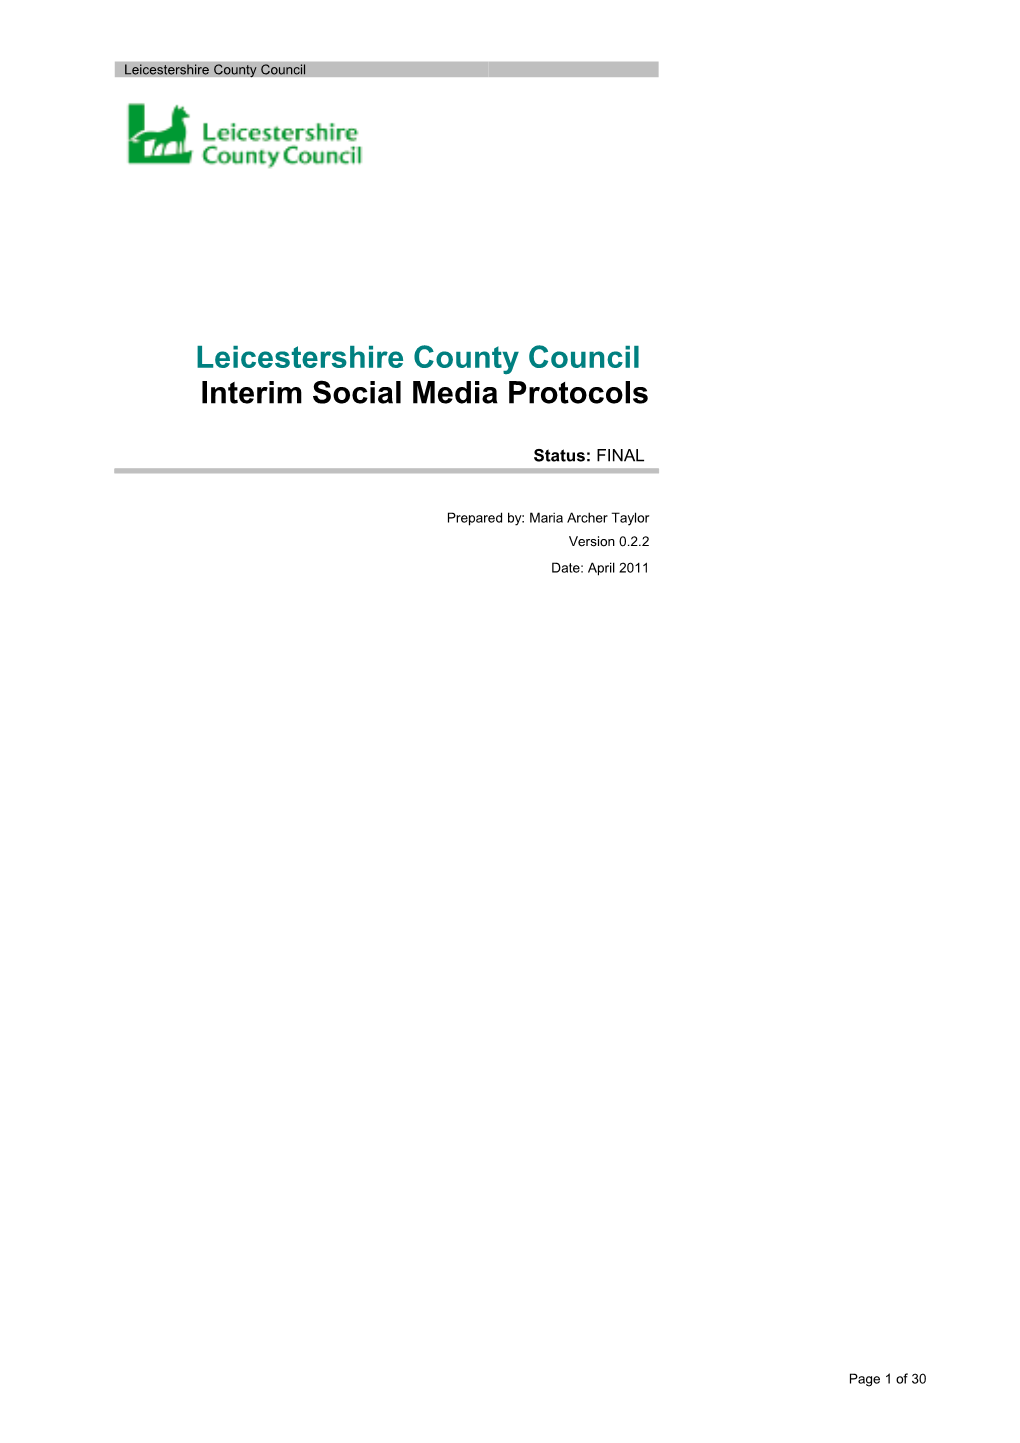 Interim Social Media Protocols